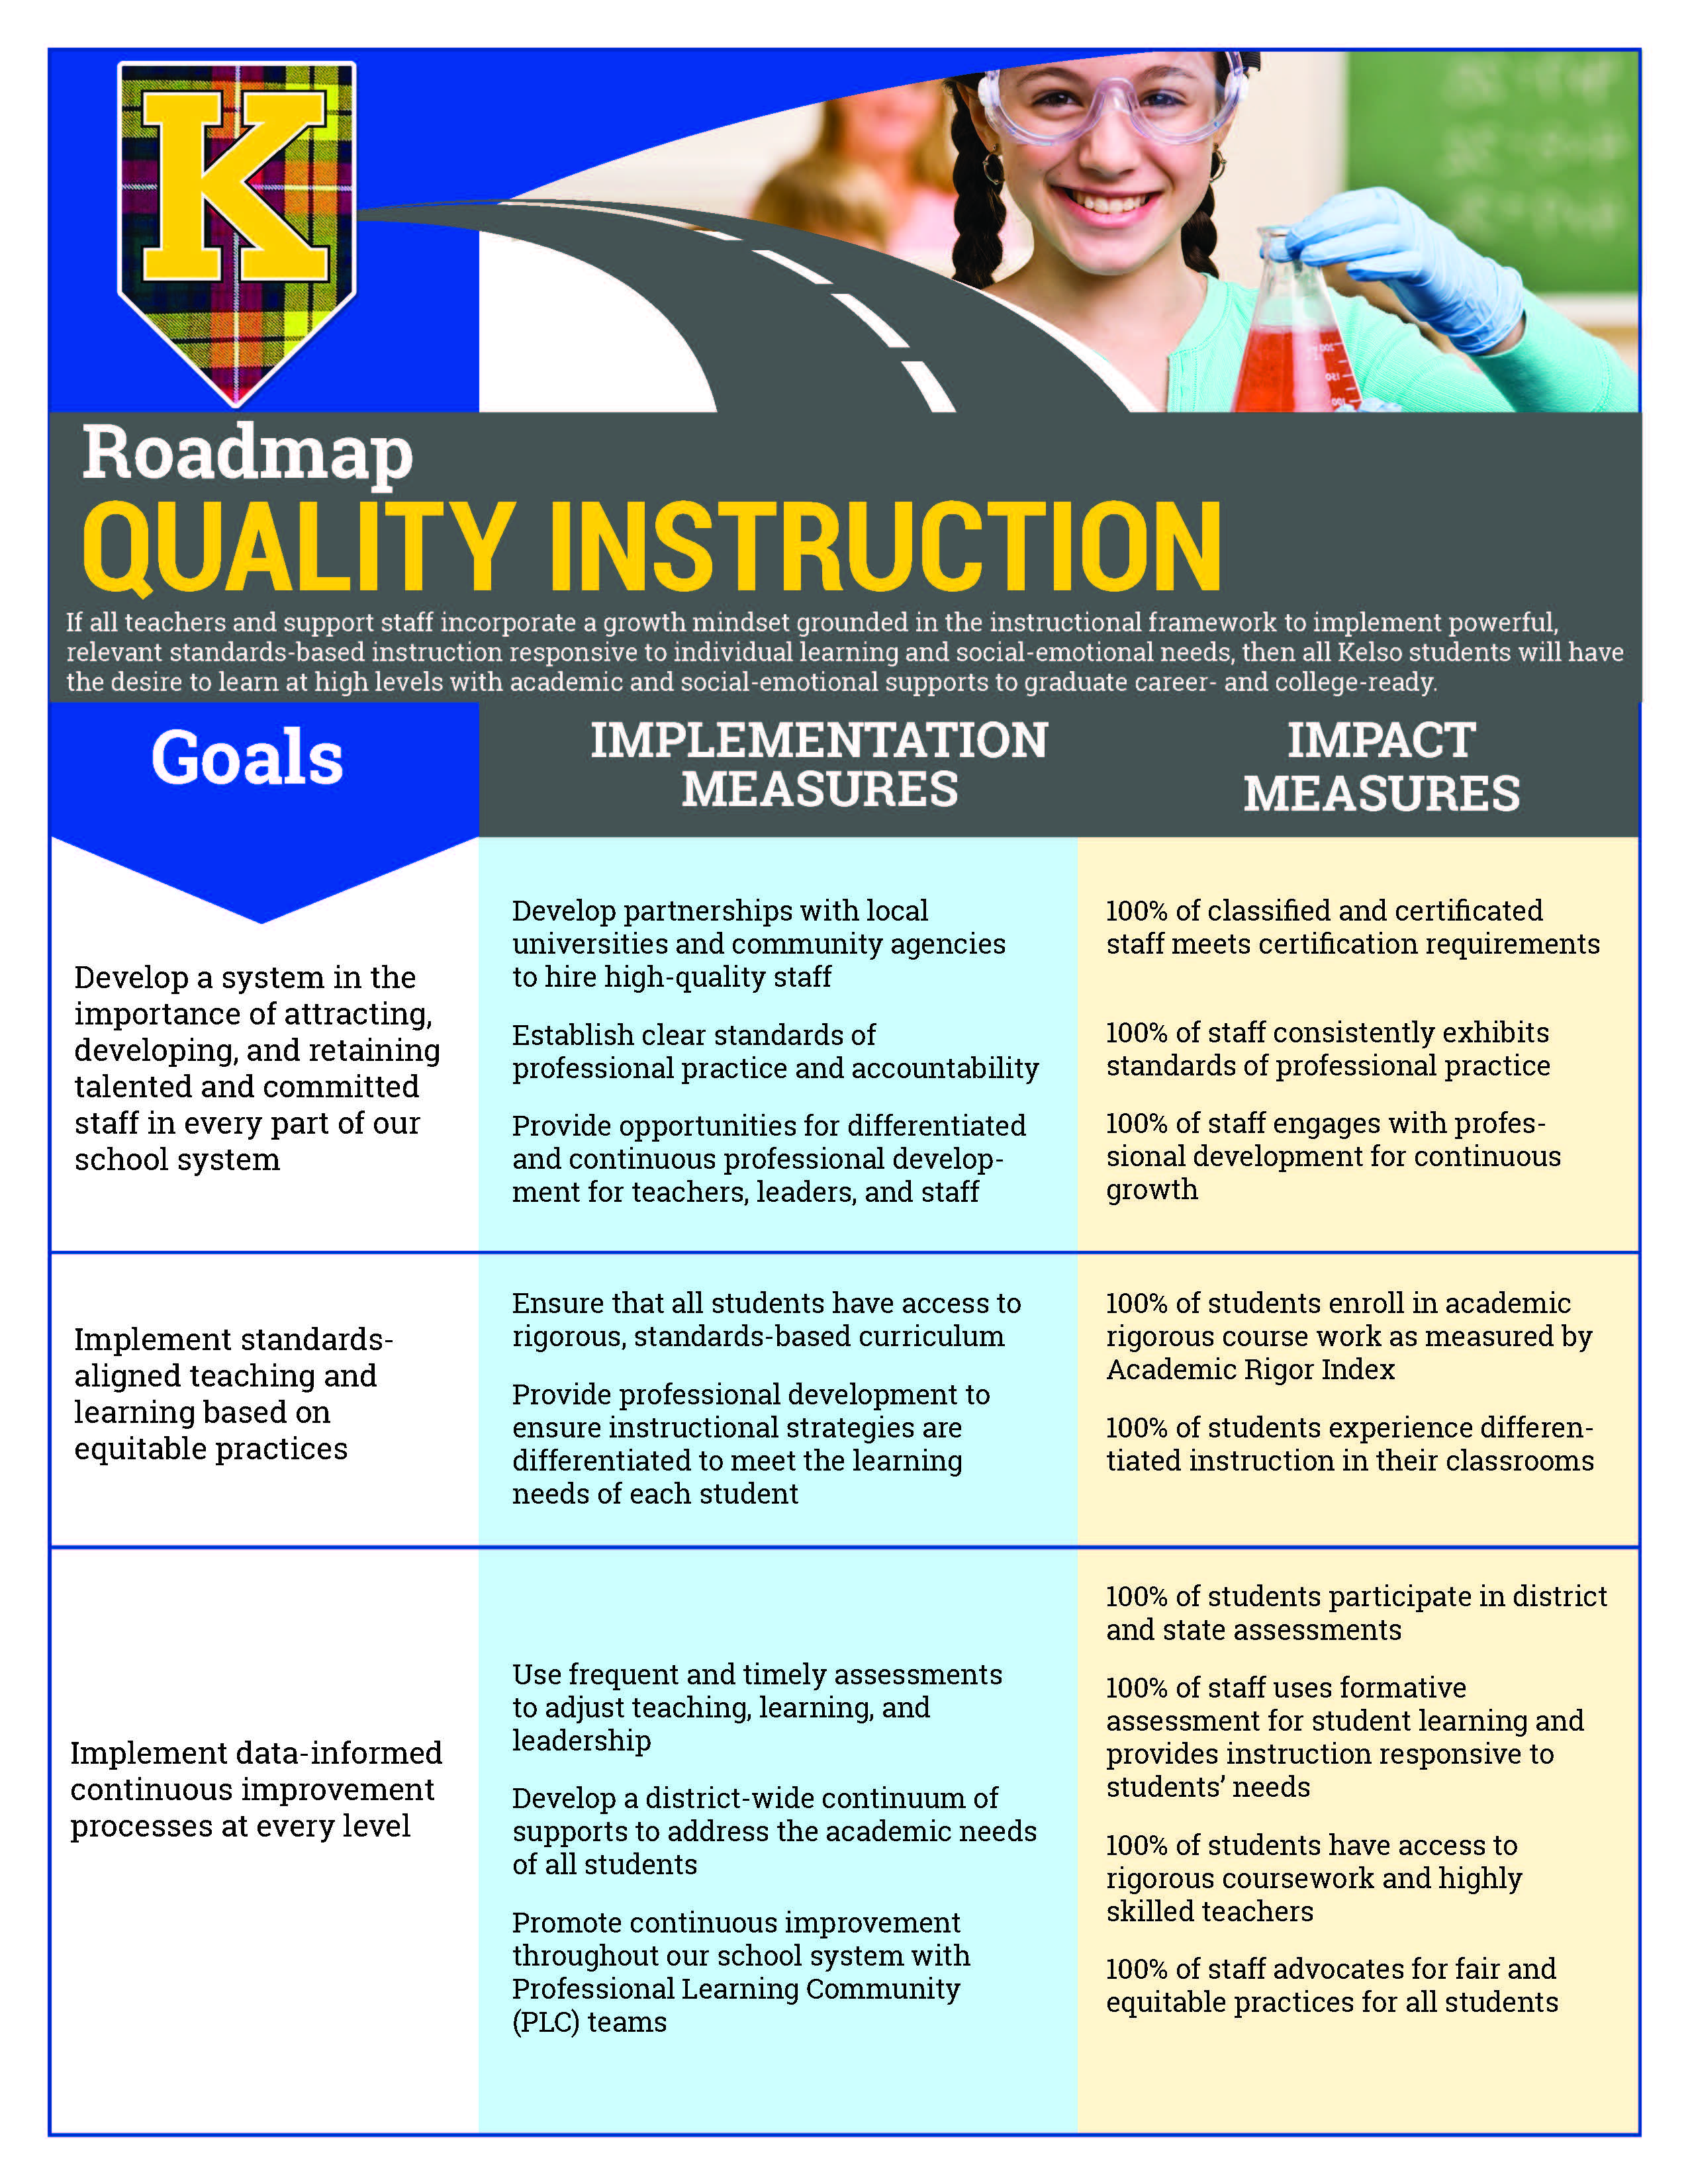 ROADMAP QUALITY INSTRUCTION INFORMATION